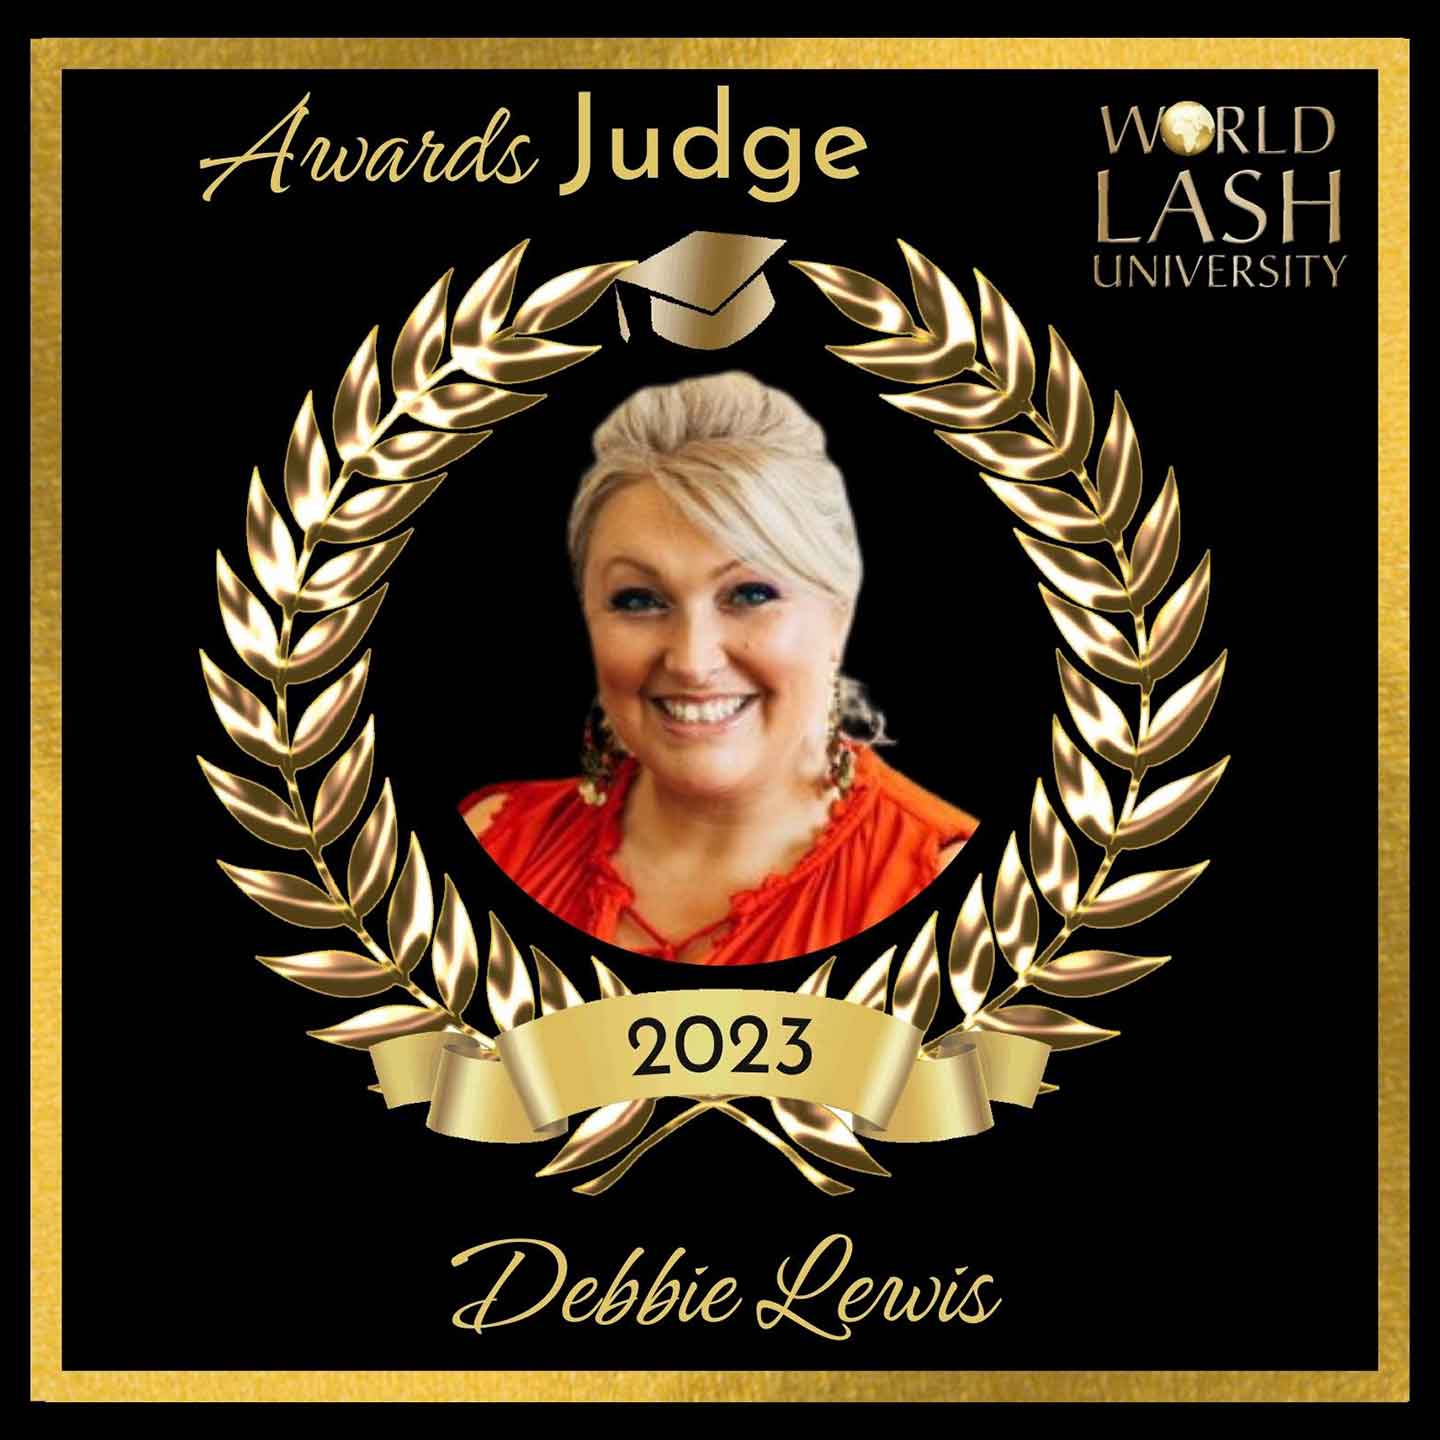 Debbie-Lewis-World-Lash-University-Awards-Judge-1